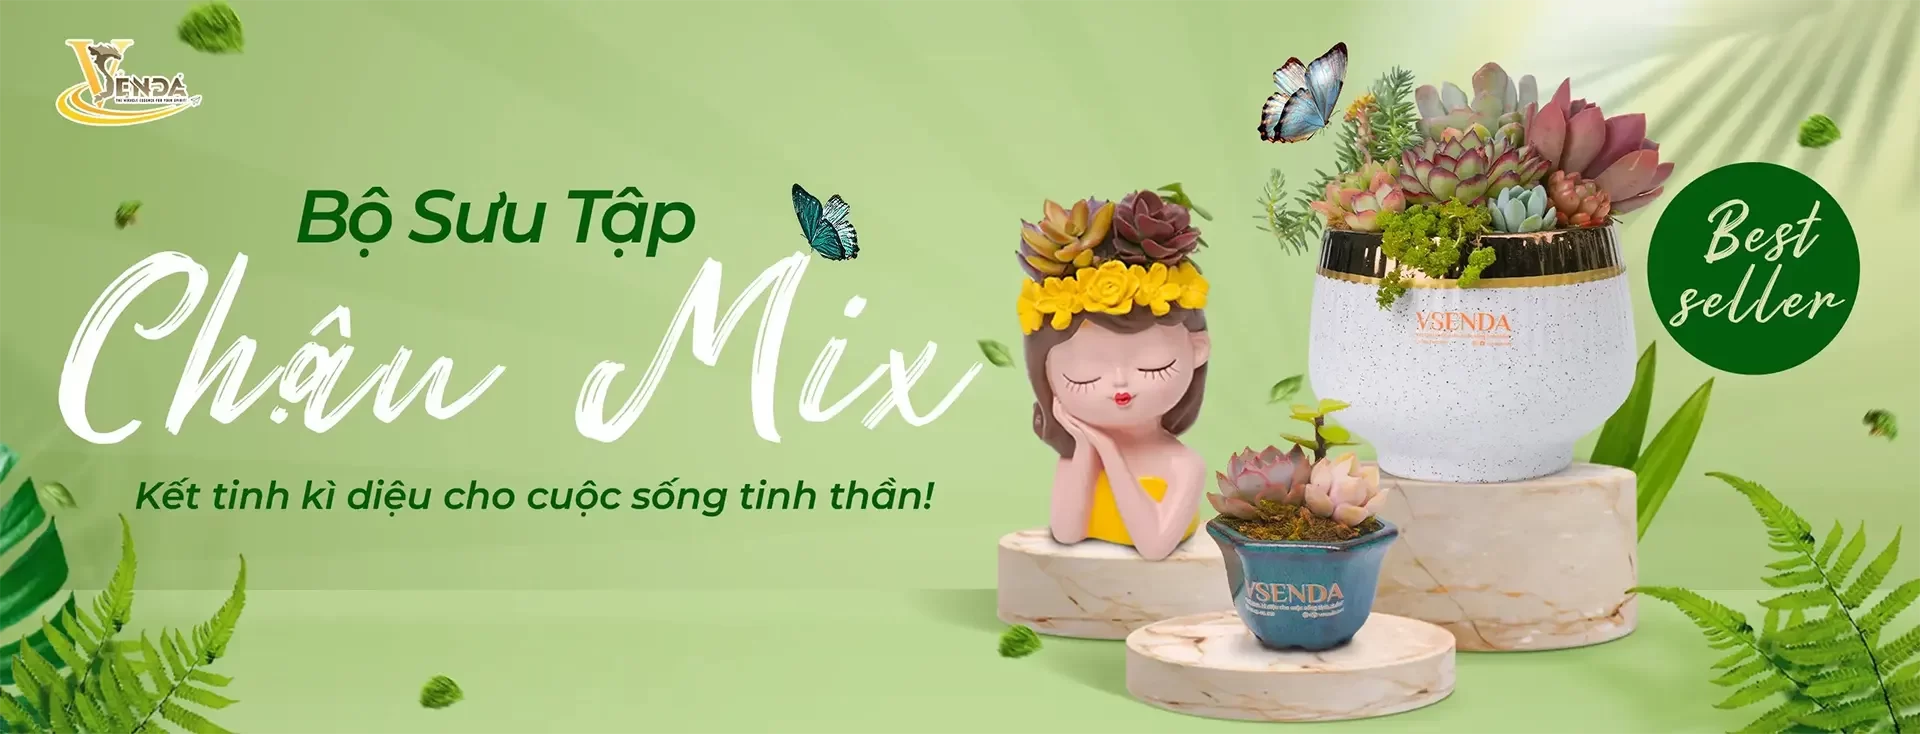 Banner-Chau-mix1